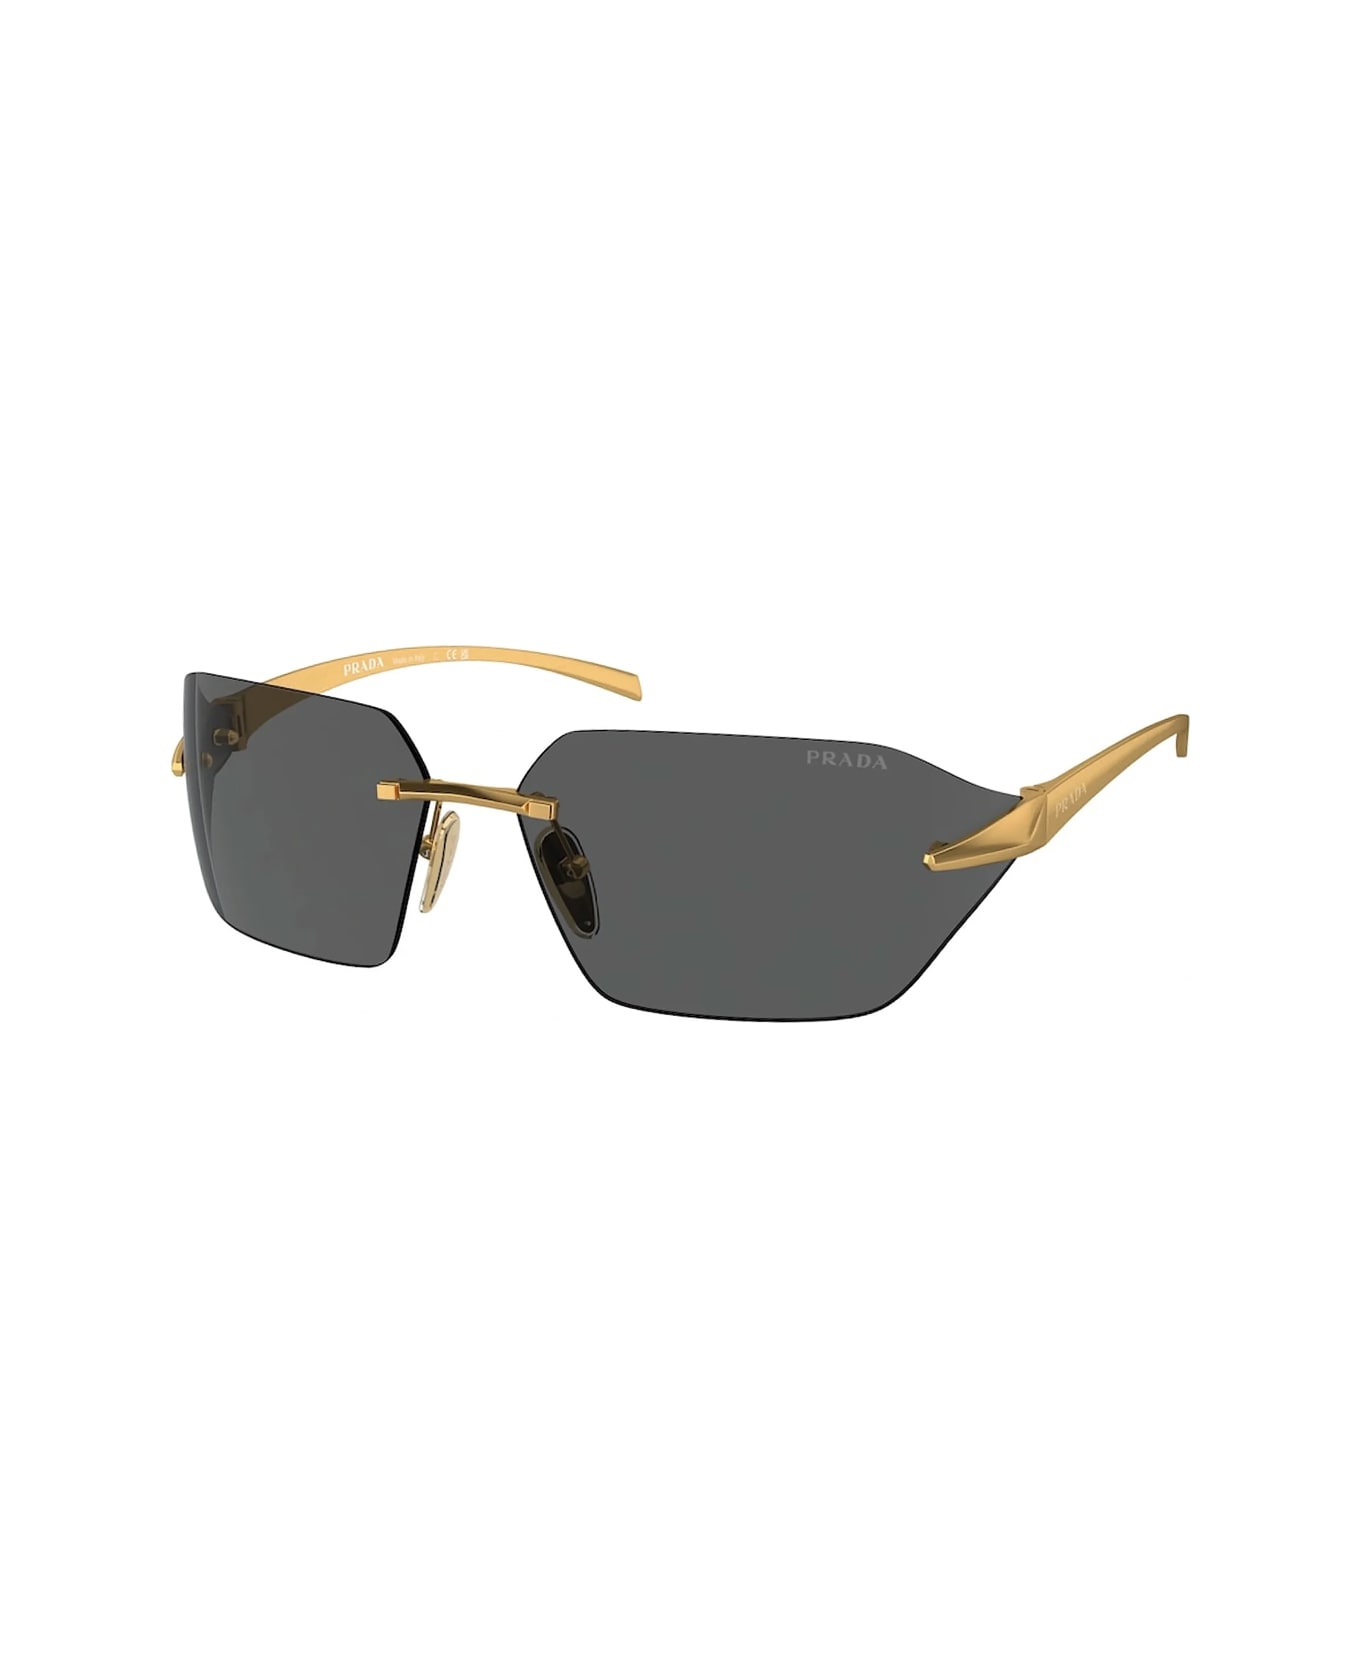 Prada Eyewear Pra56s 15n5s0 Sunglasses - Oro